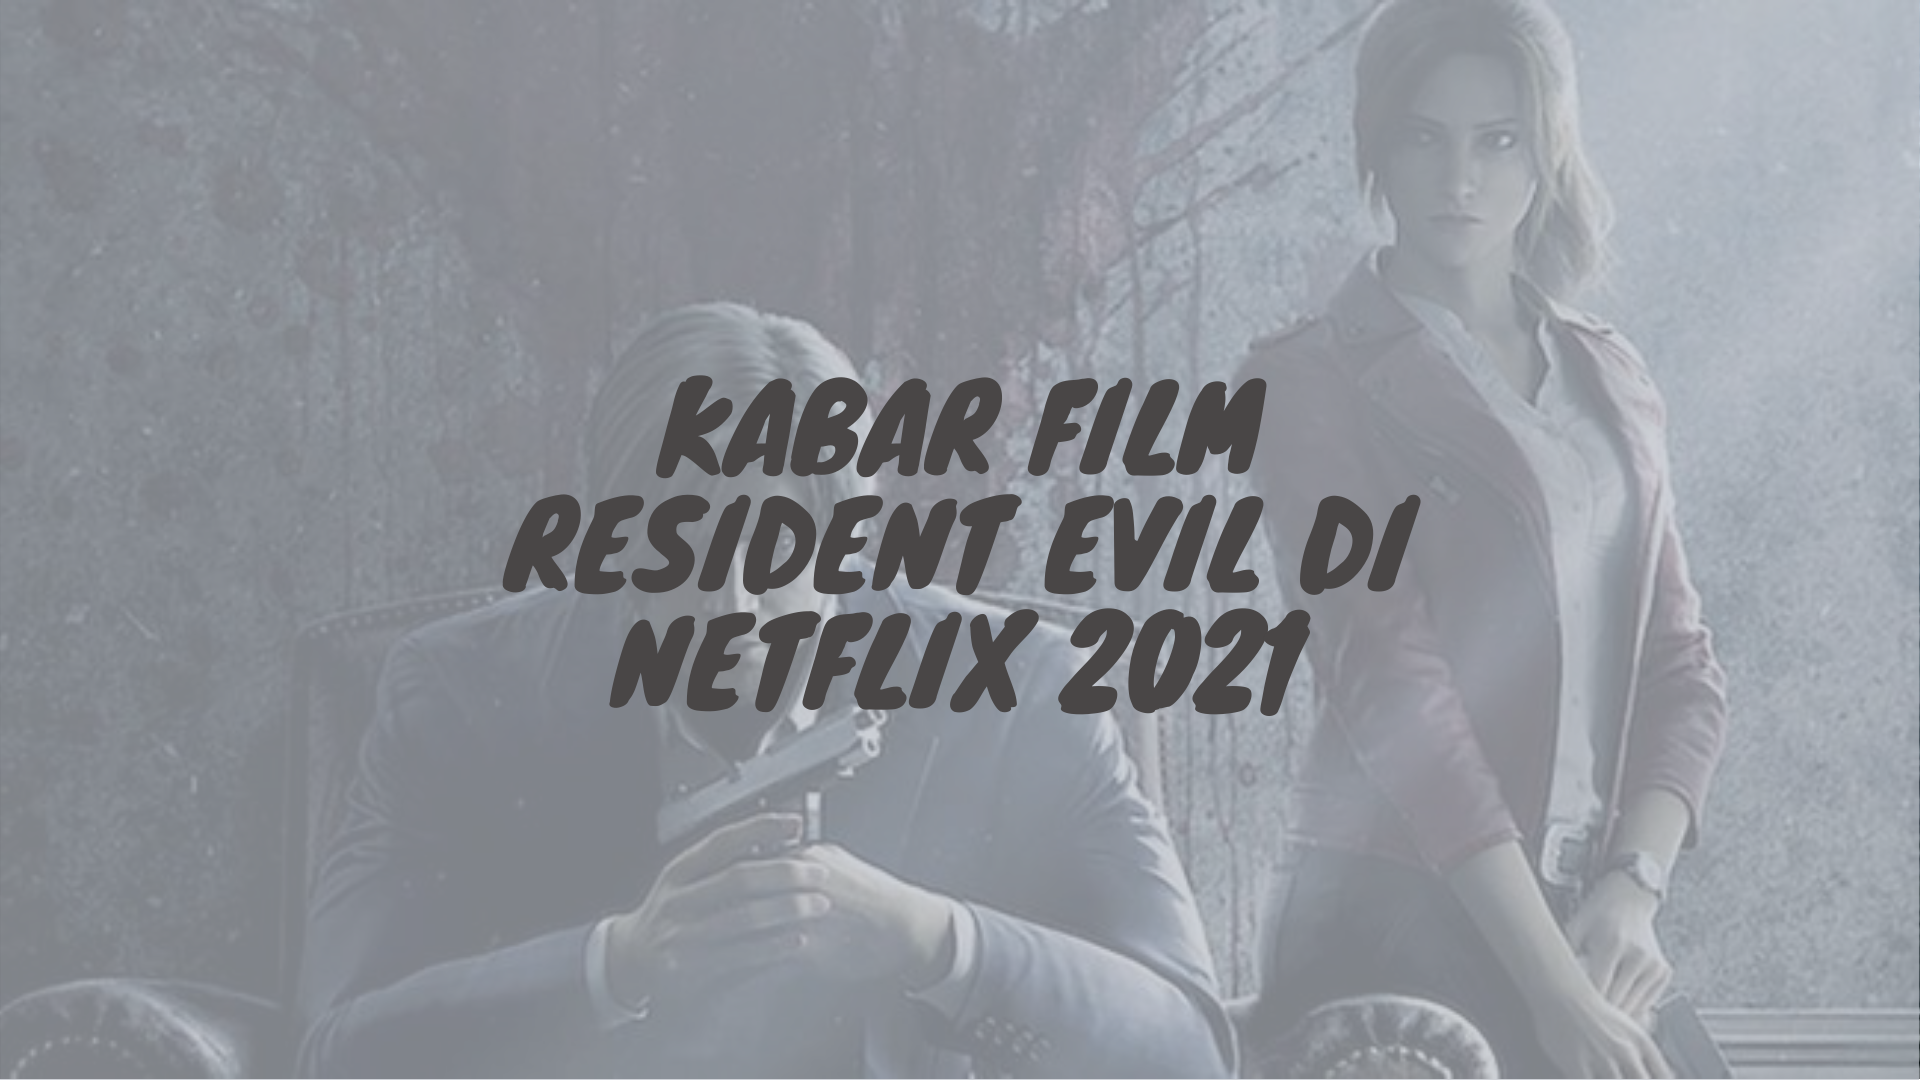 Kabar Film Resident Evil di Netflix 2021 | tulisIN